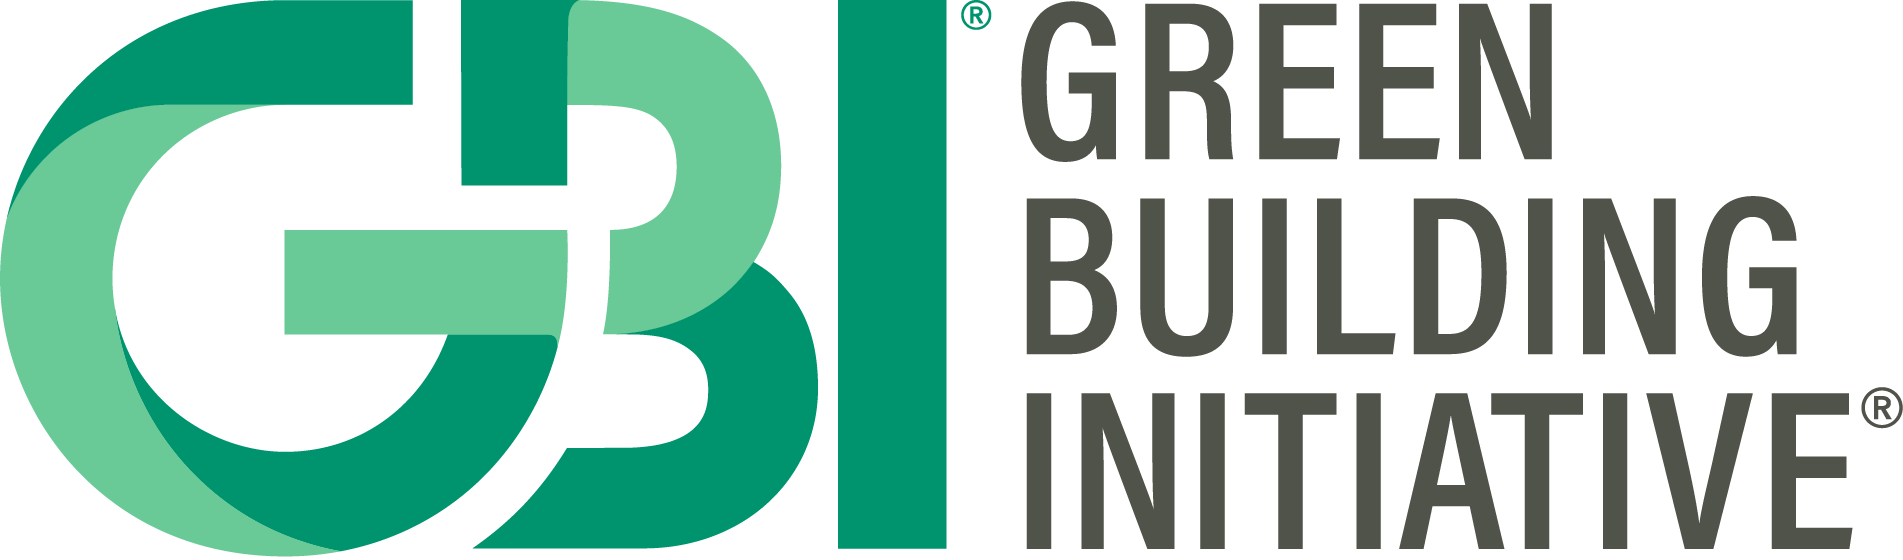 Green Building Initiative Logo